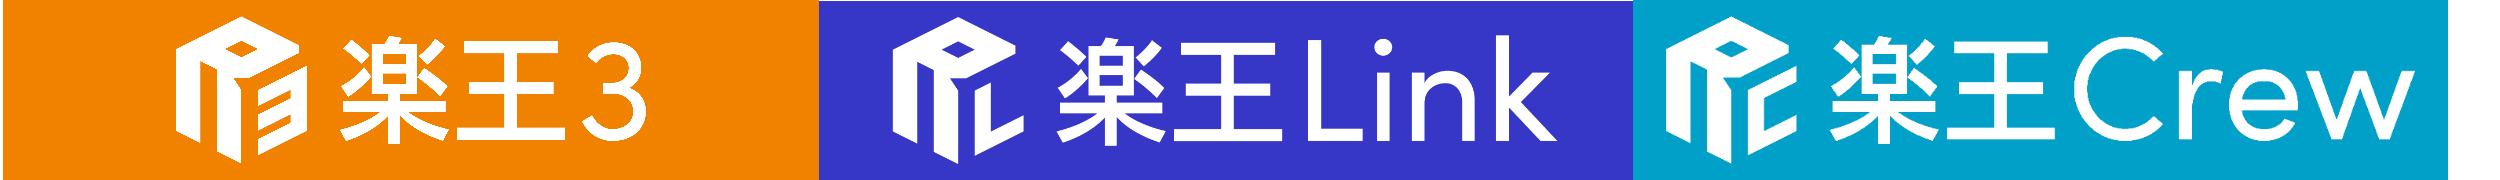 楽王3ロゴ